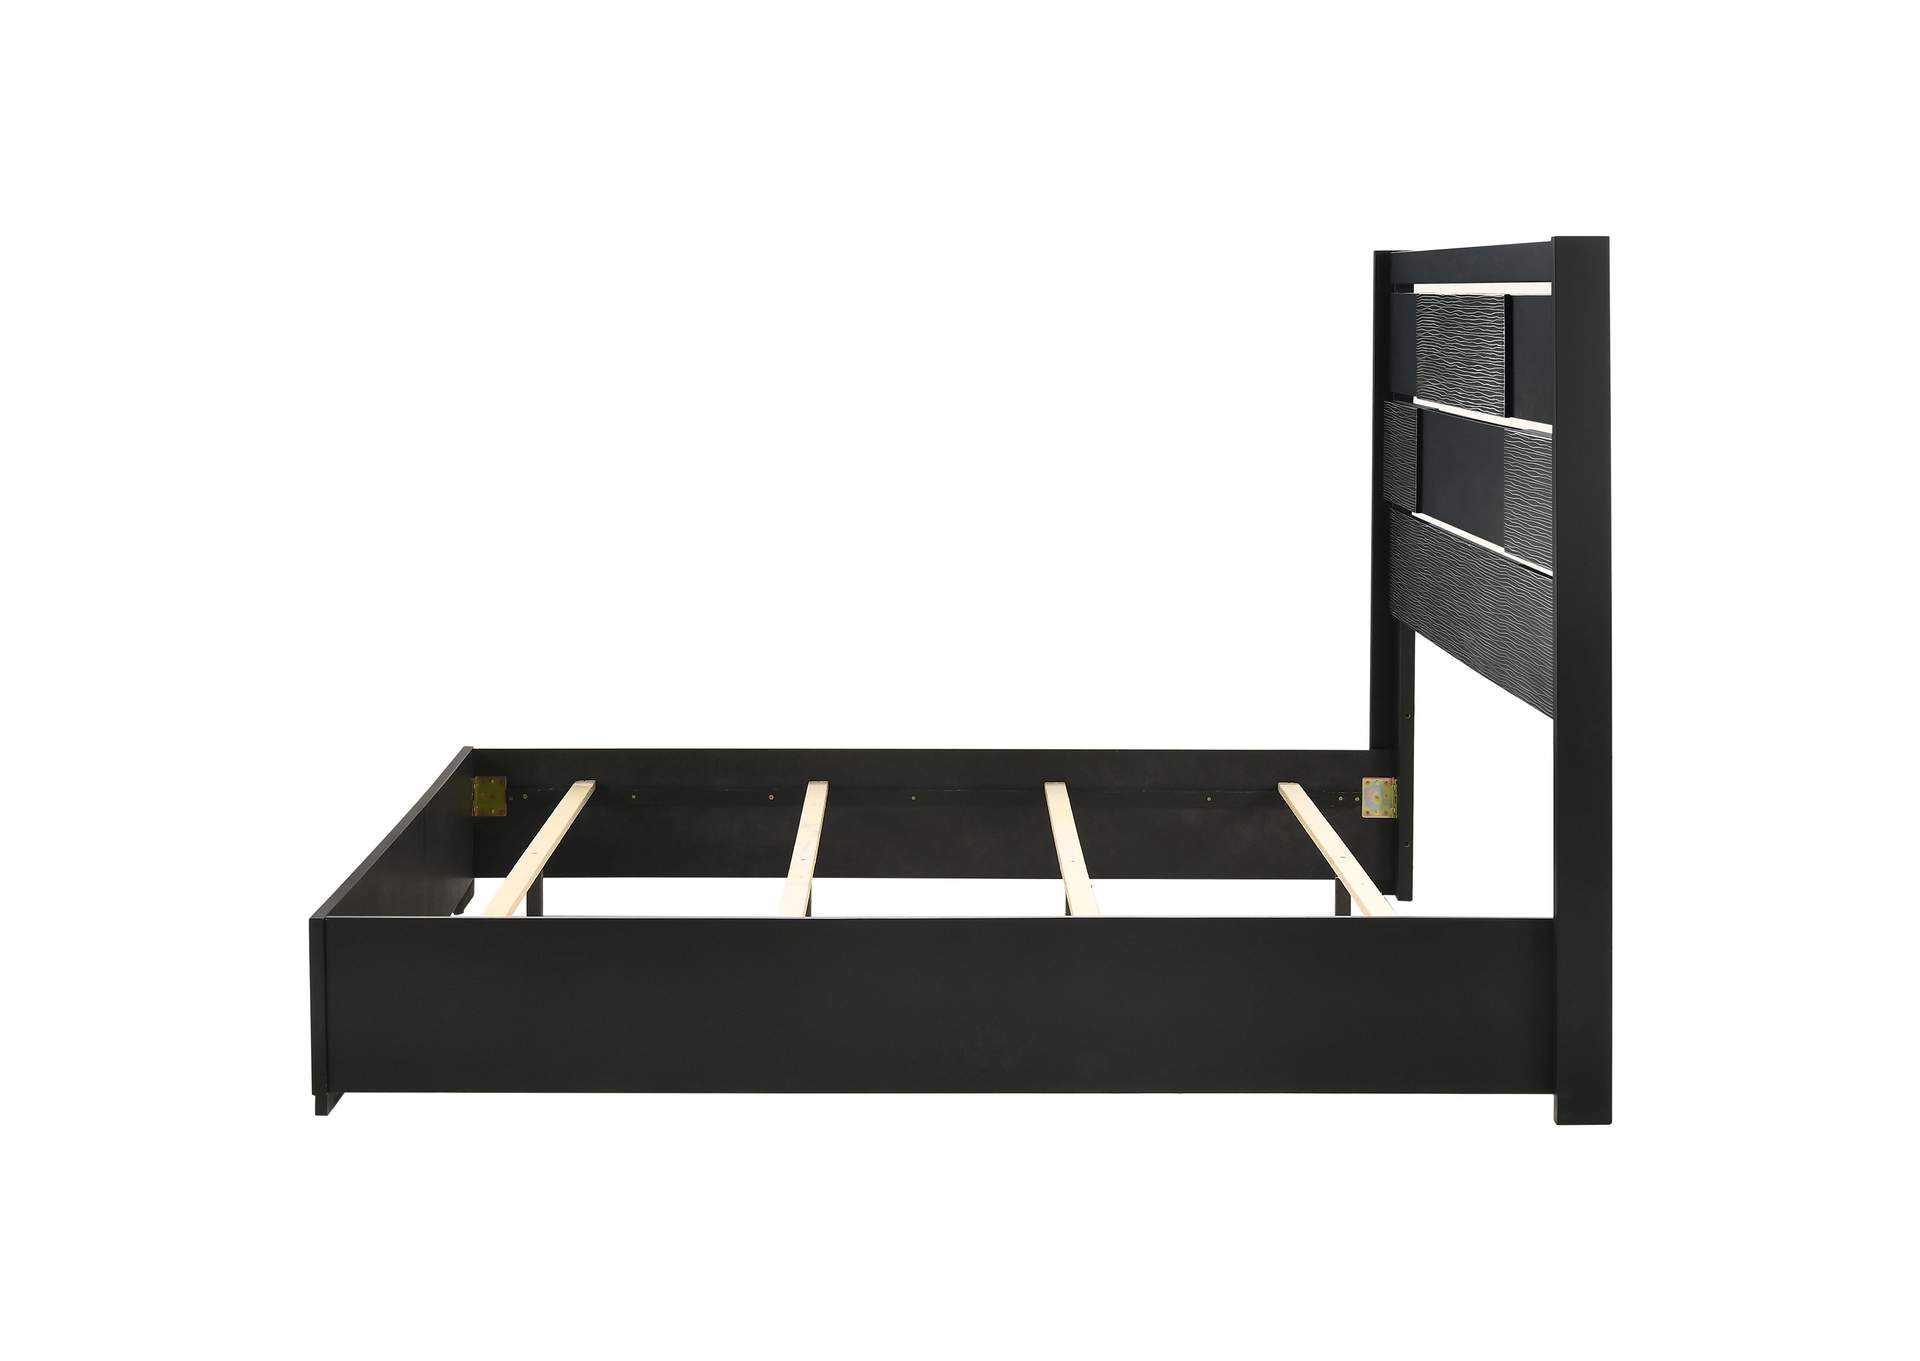 Blacktoft Queen Panel Bed Black,Coaster Furniture